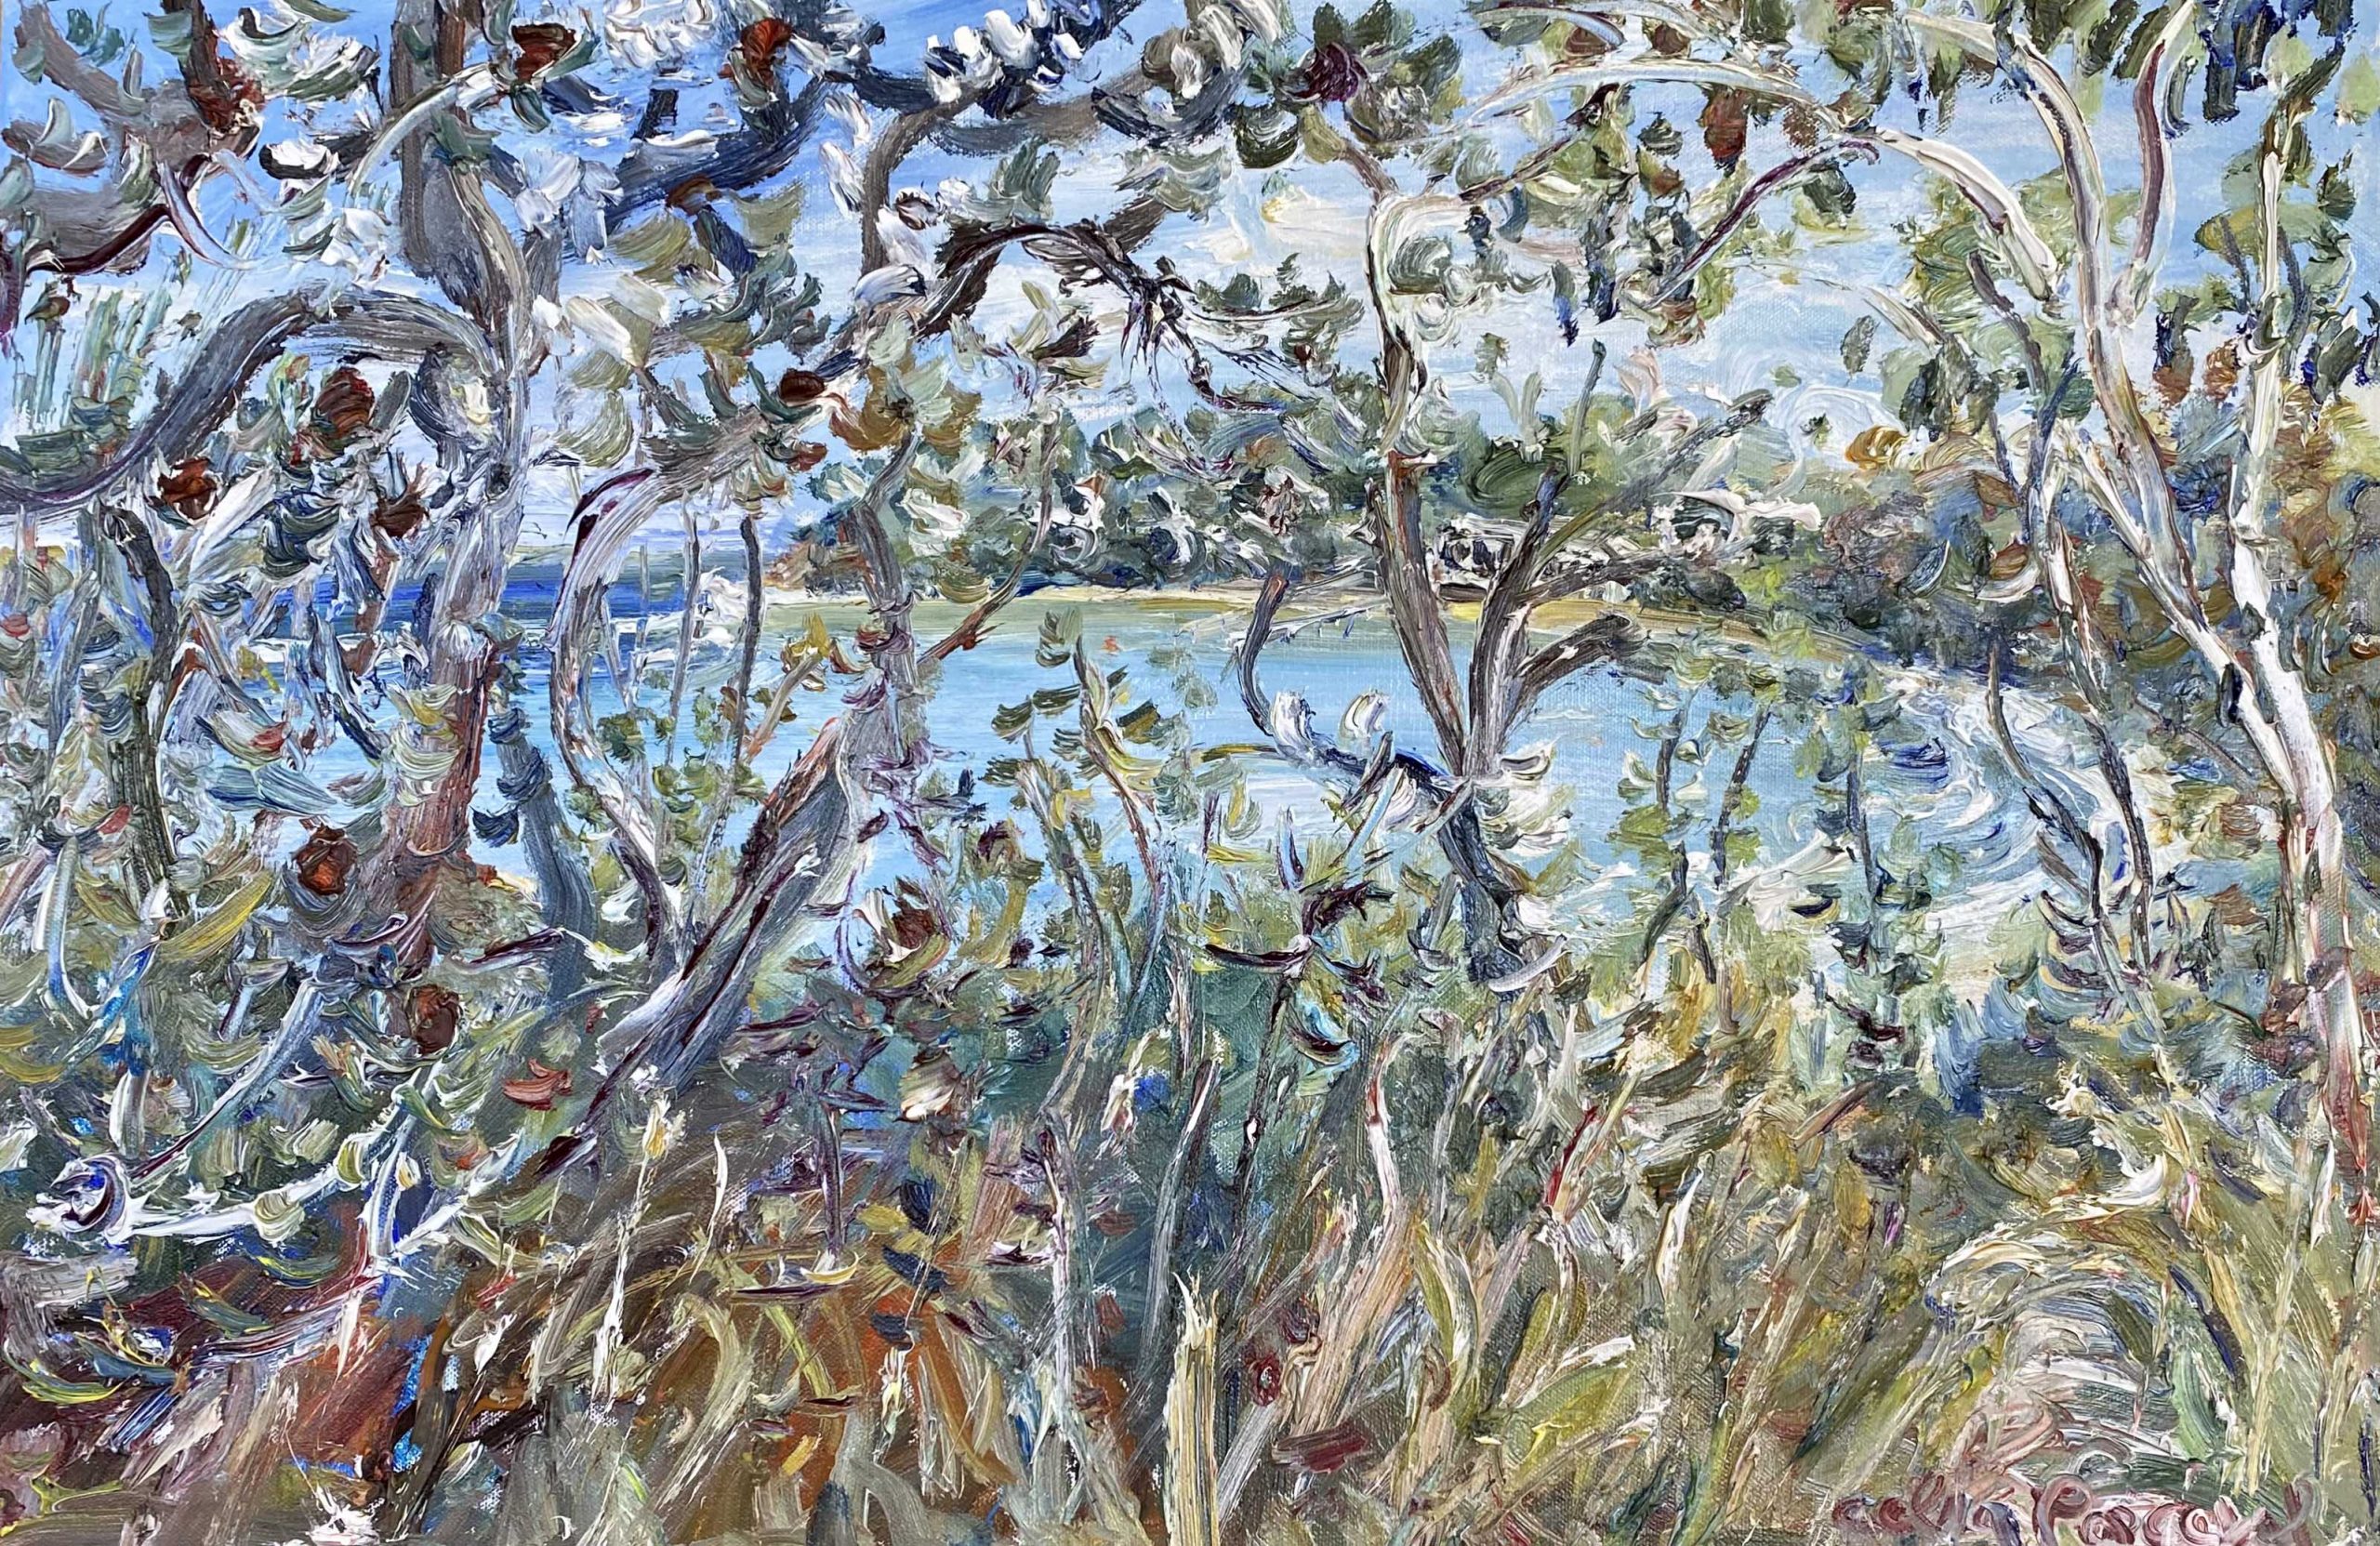 Celia Perceval 'Landscape at Point Leo' oil on canvas 50 x 77cm $9,500